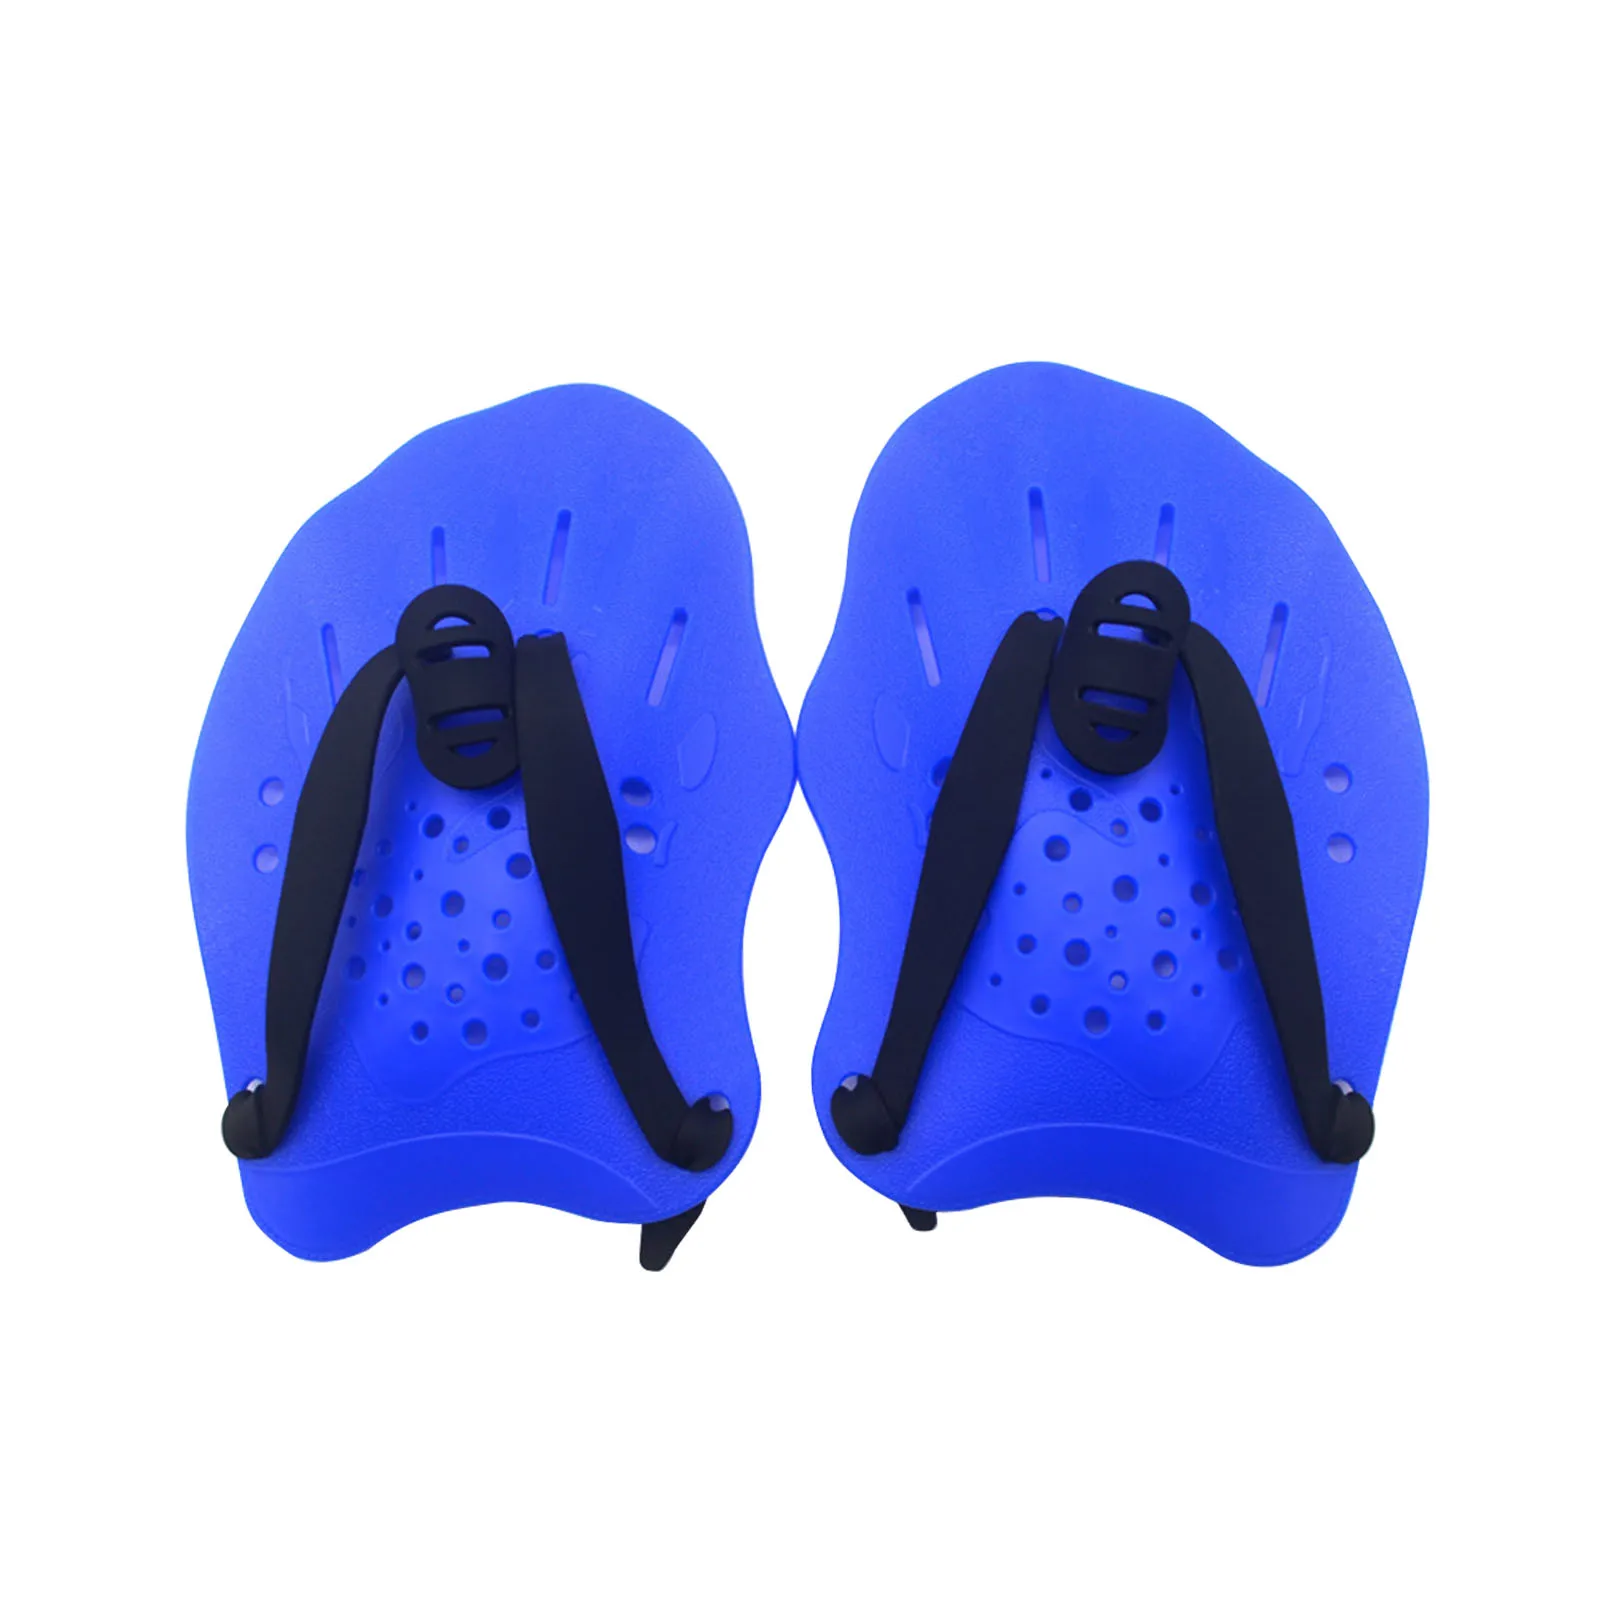 

1pair Flat Ergonomic Beginner Water Sports Gloves Swimming Paddles For Hands Men Women Multifunction Training Aid Practice